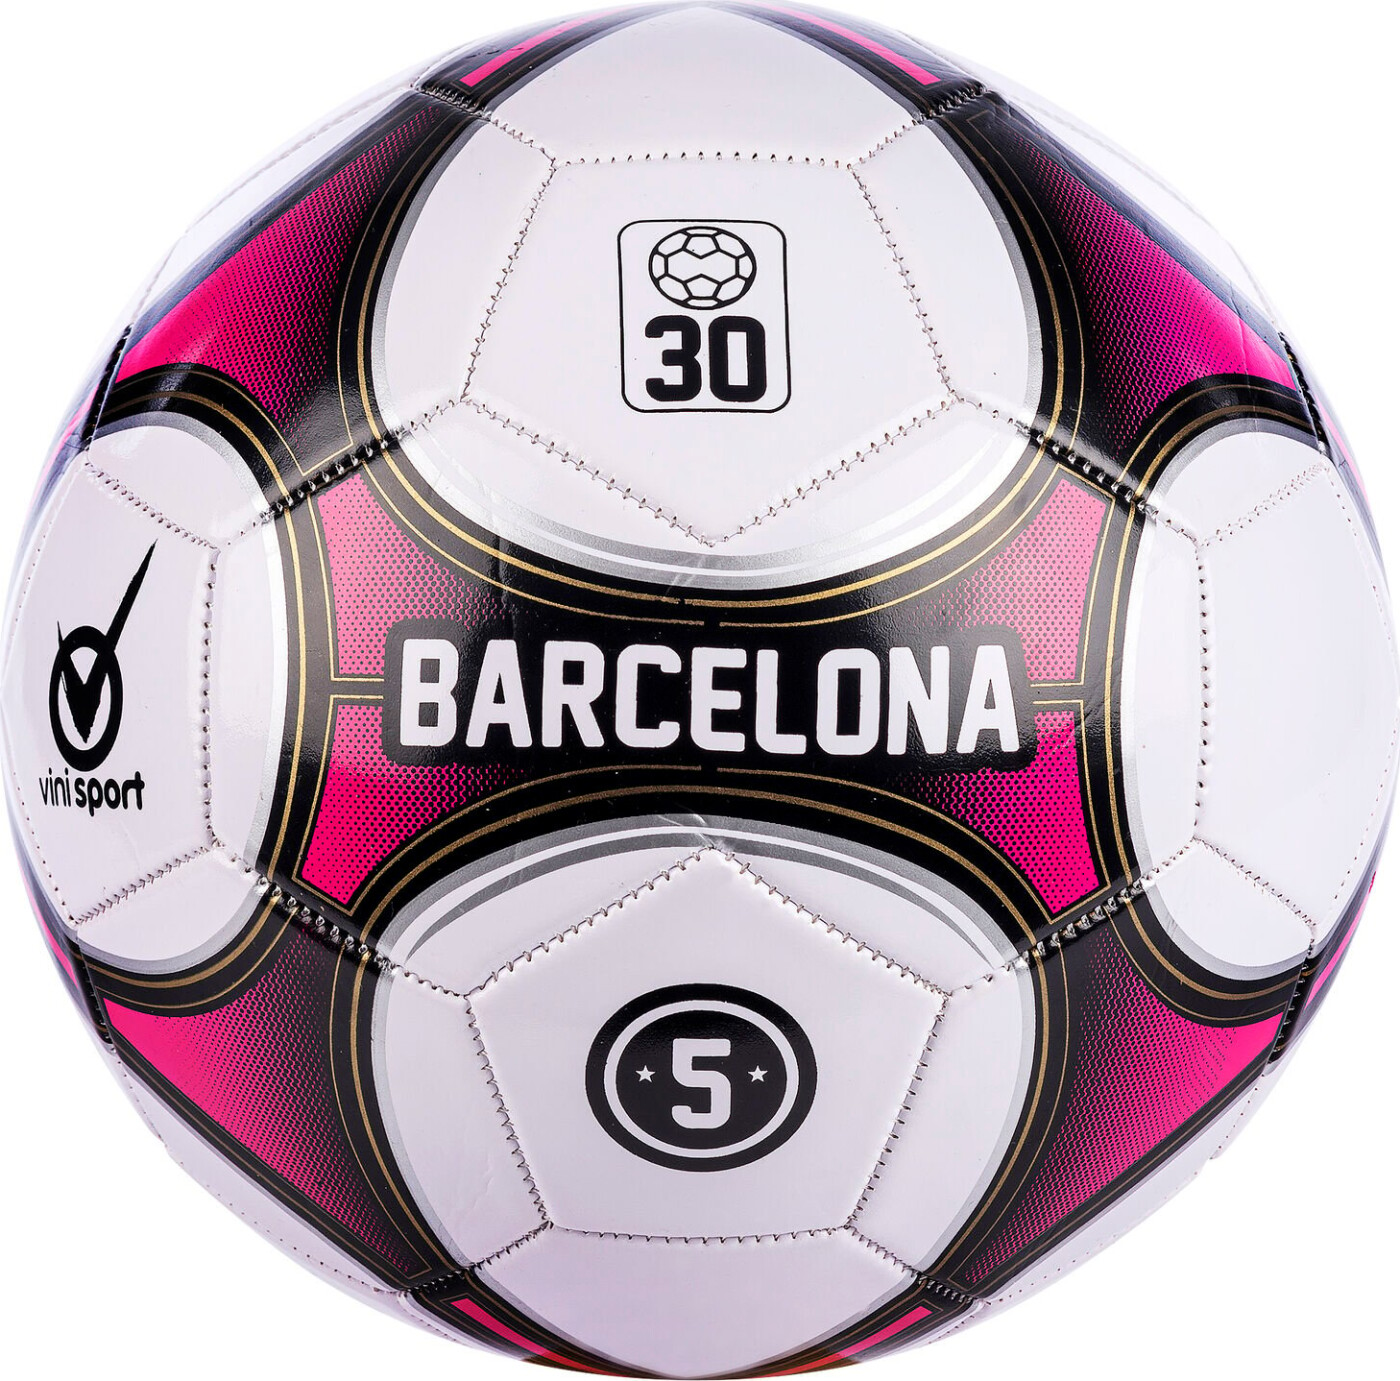 Fodbold - Barcelona - Str. 5